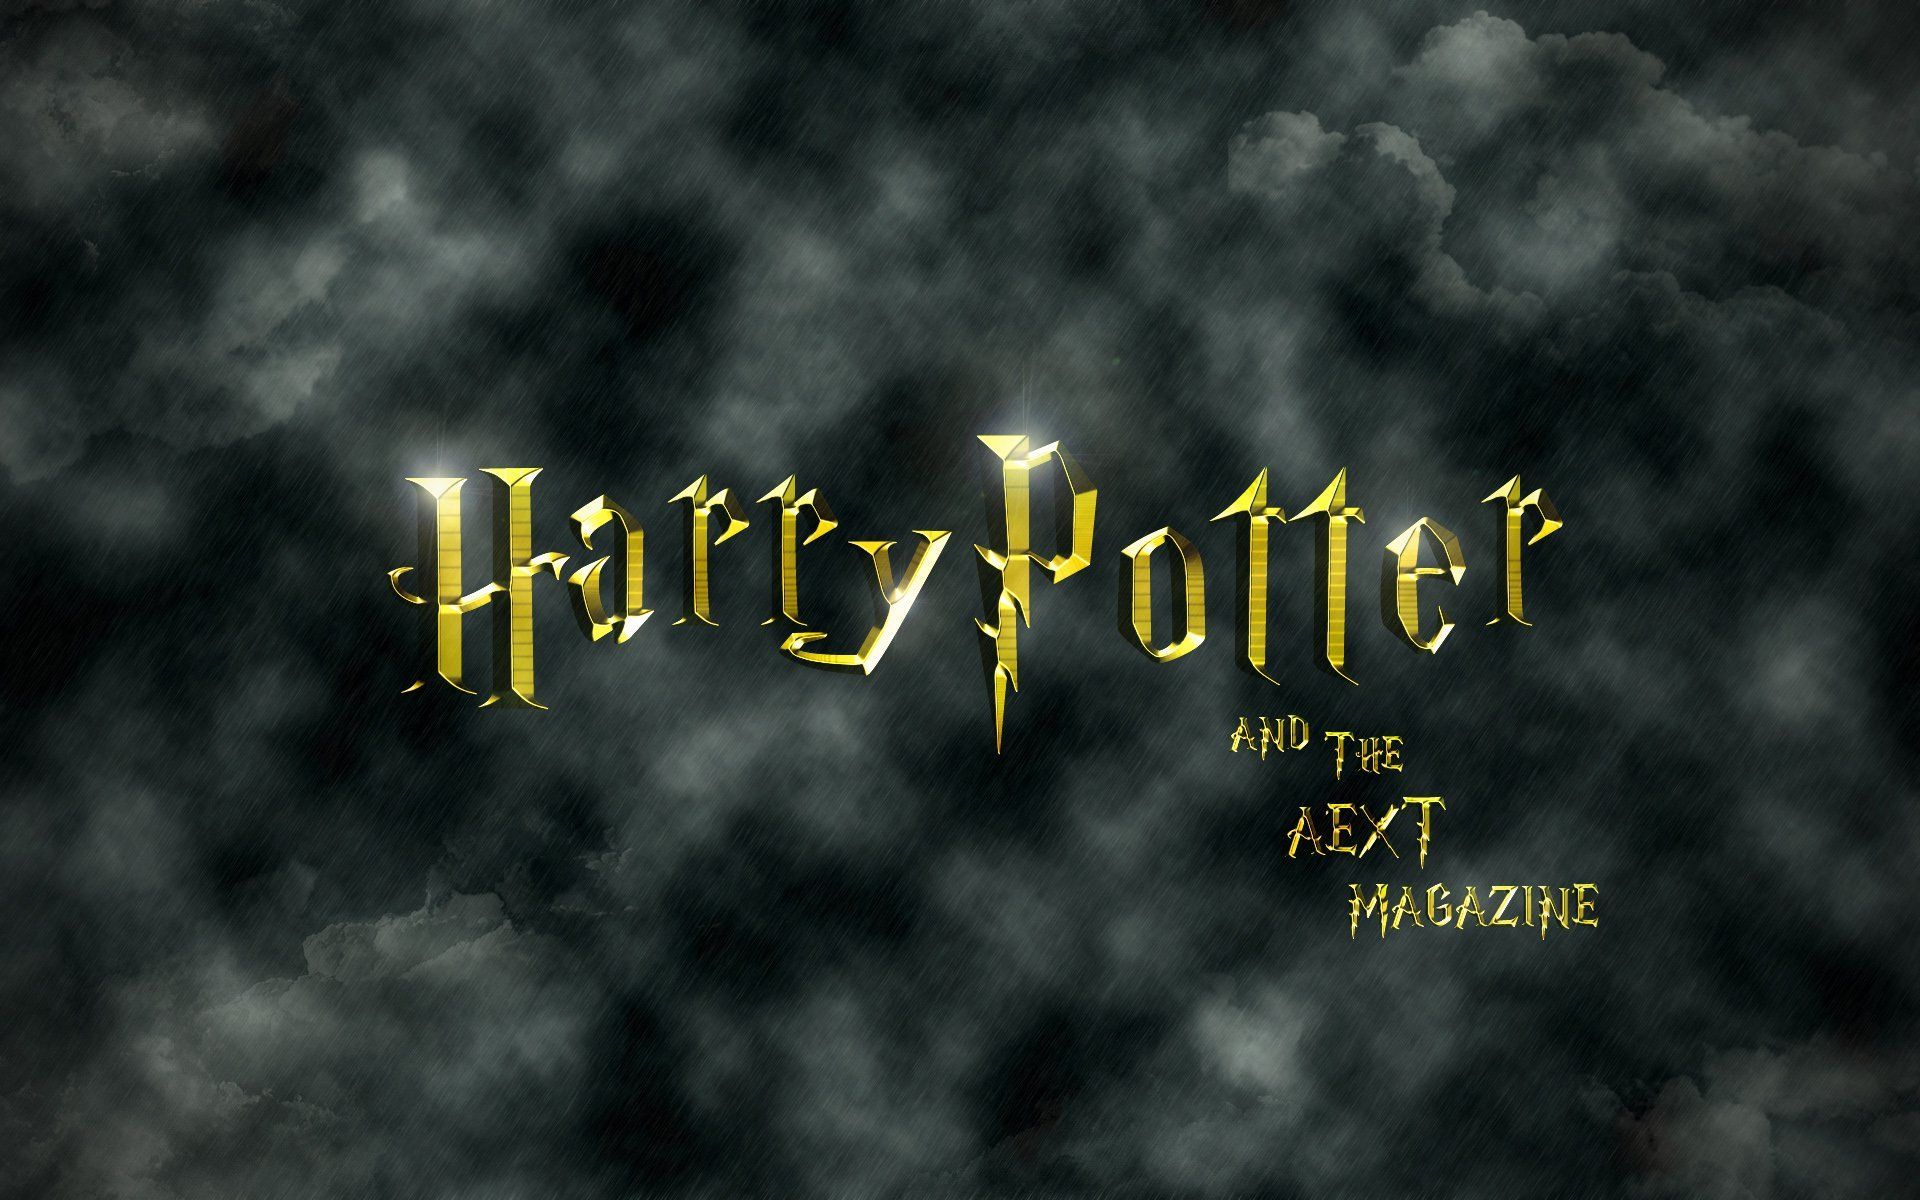 Hogwarts Wallpaper Aesthetic Laptop : Tons of awesome hogwarts